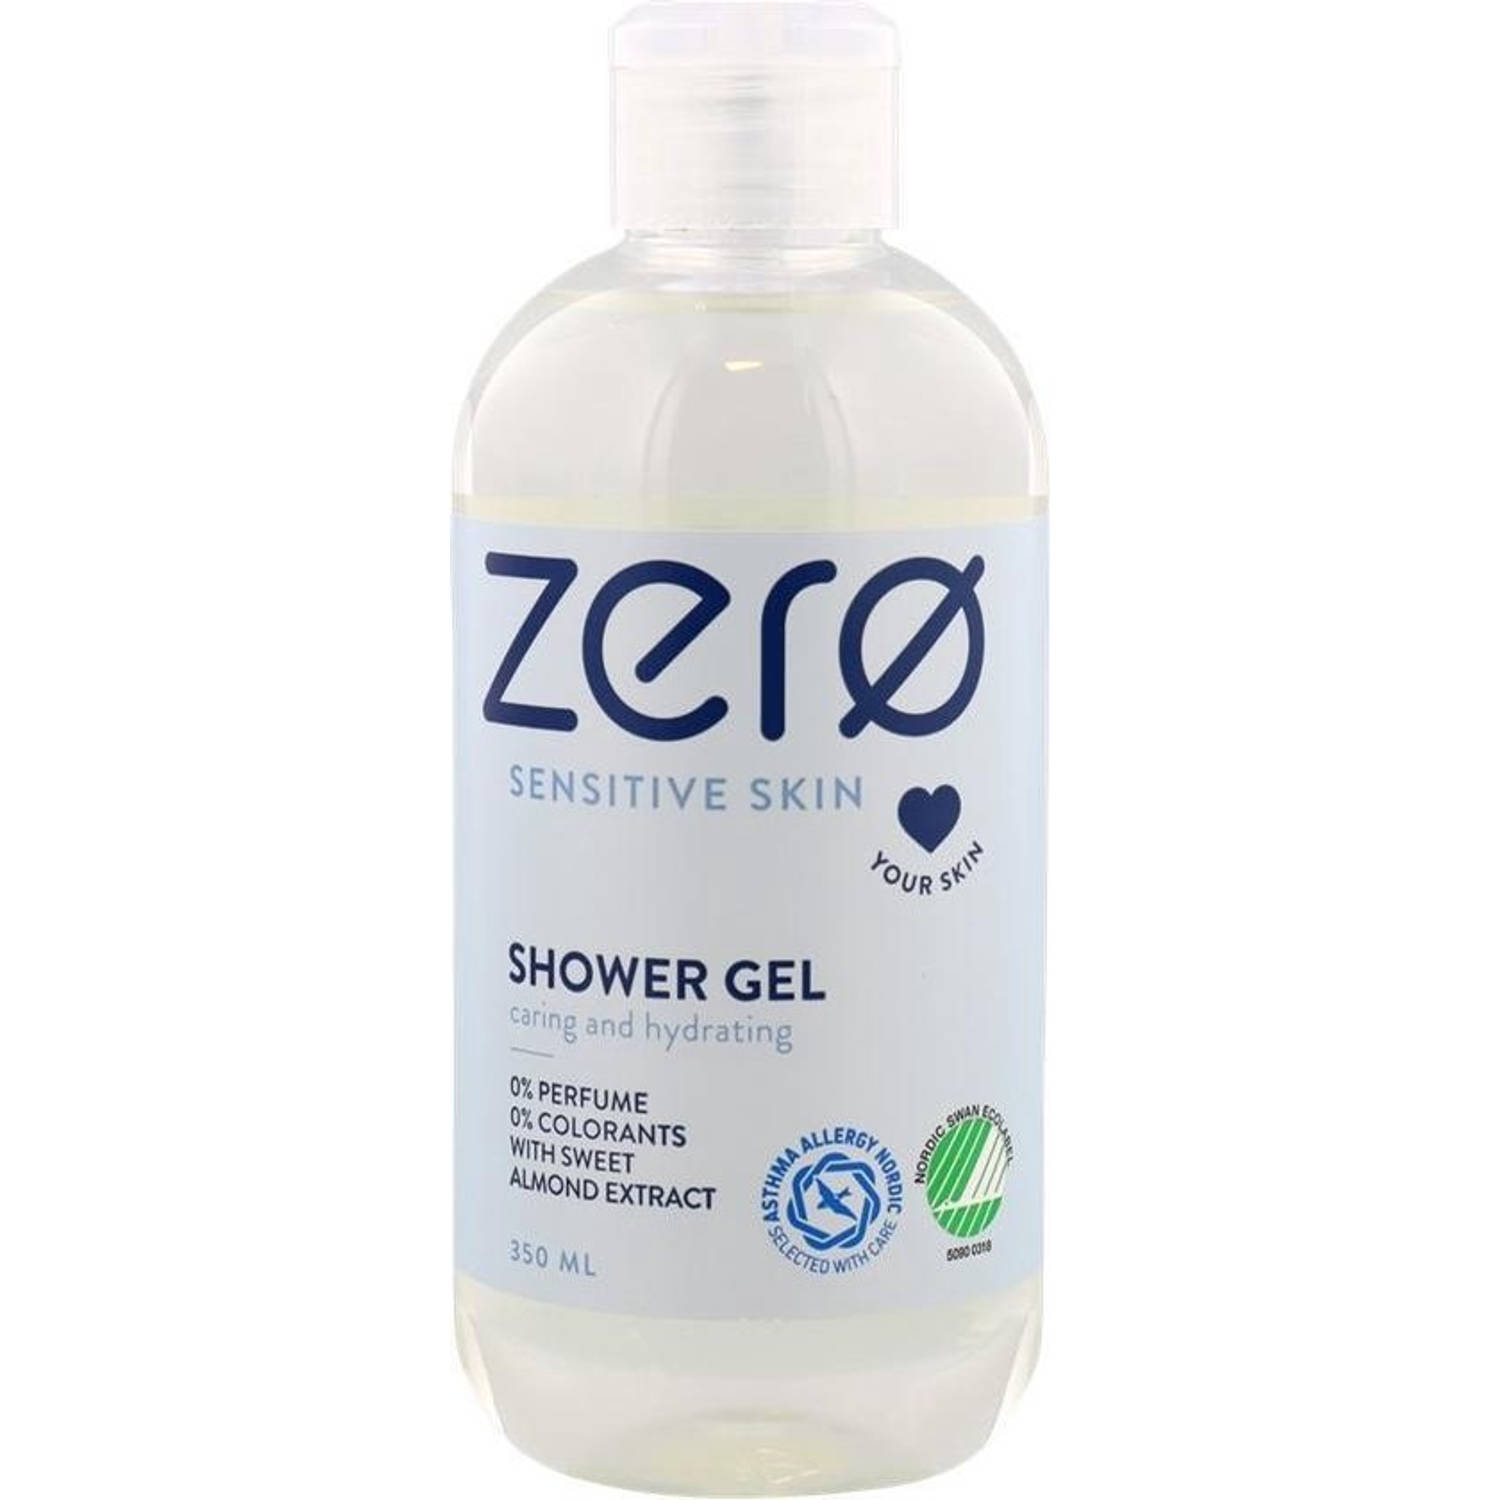 Zero Sensitive Skin Shower Gel 0% Parfum 350 ml